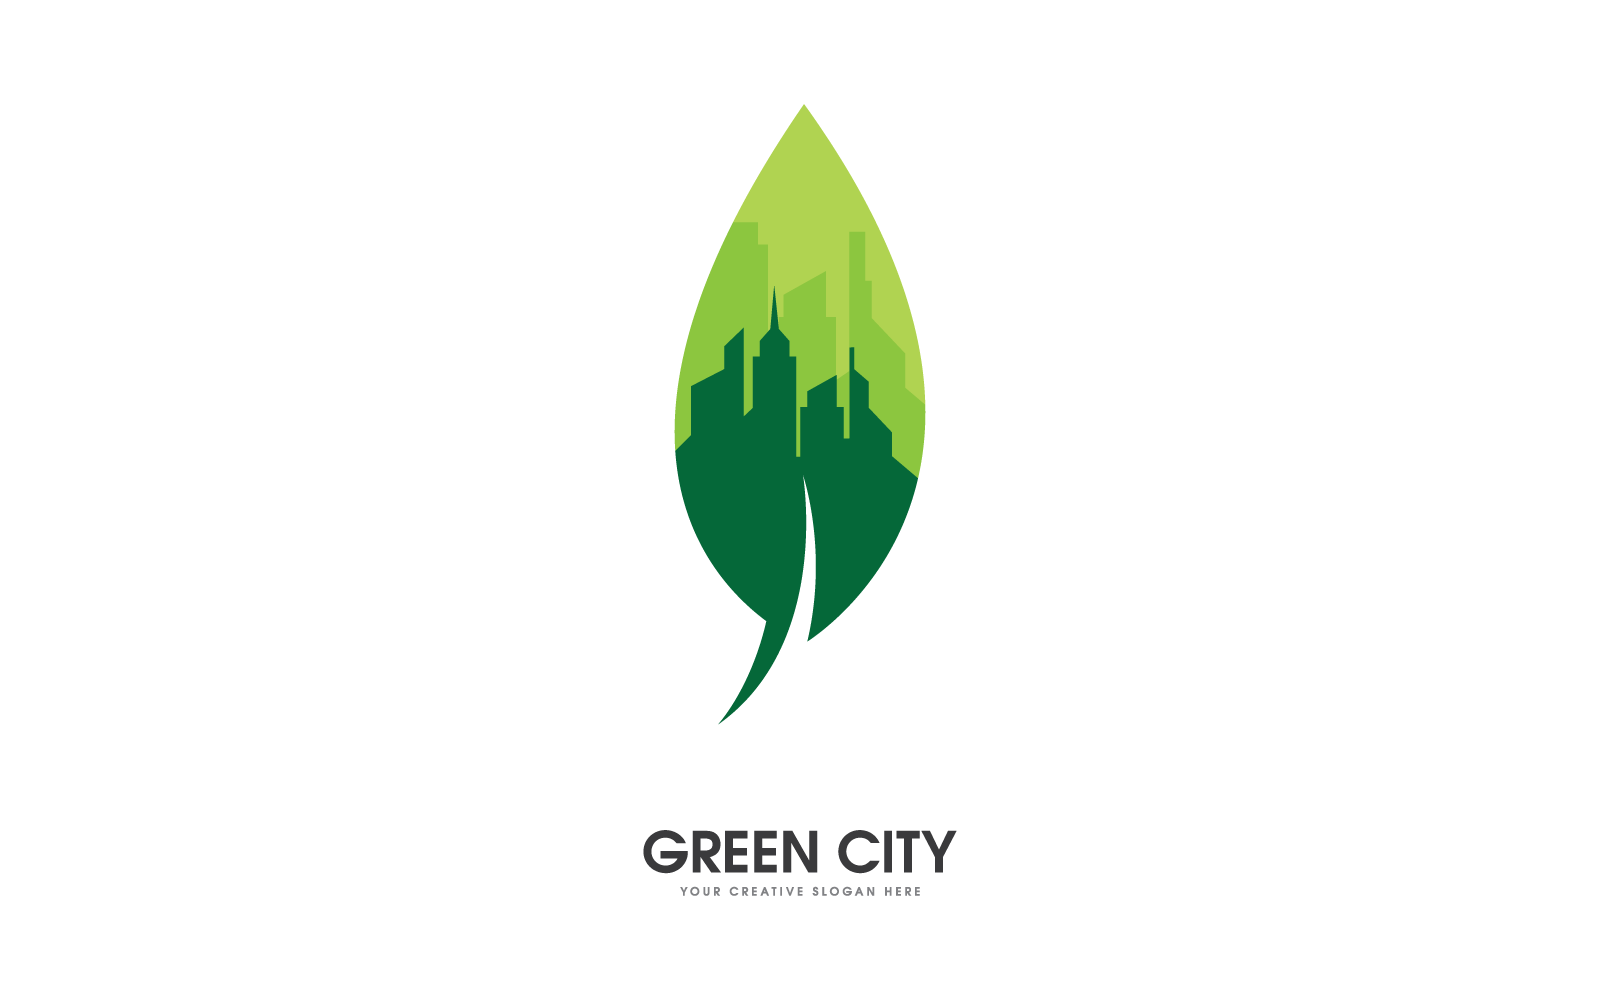 Green city logo illustration vector design Logo Template